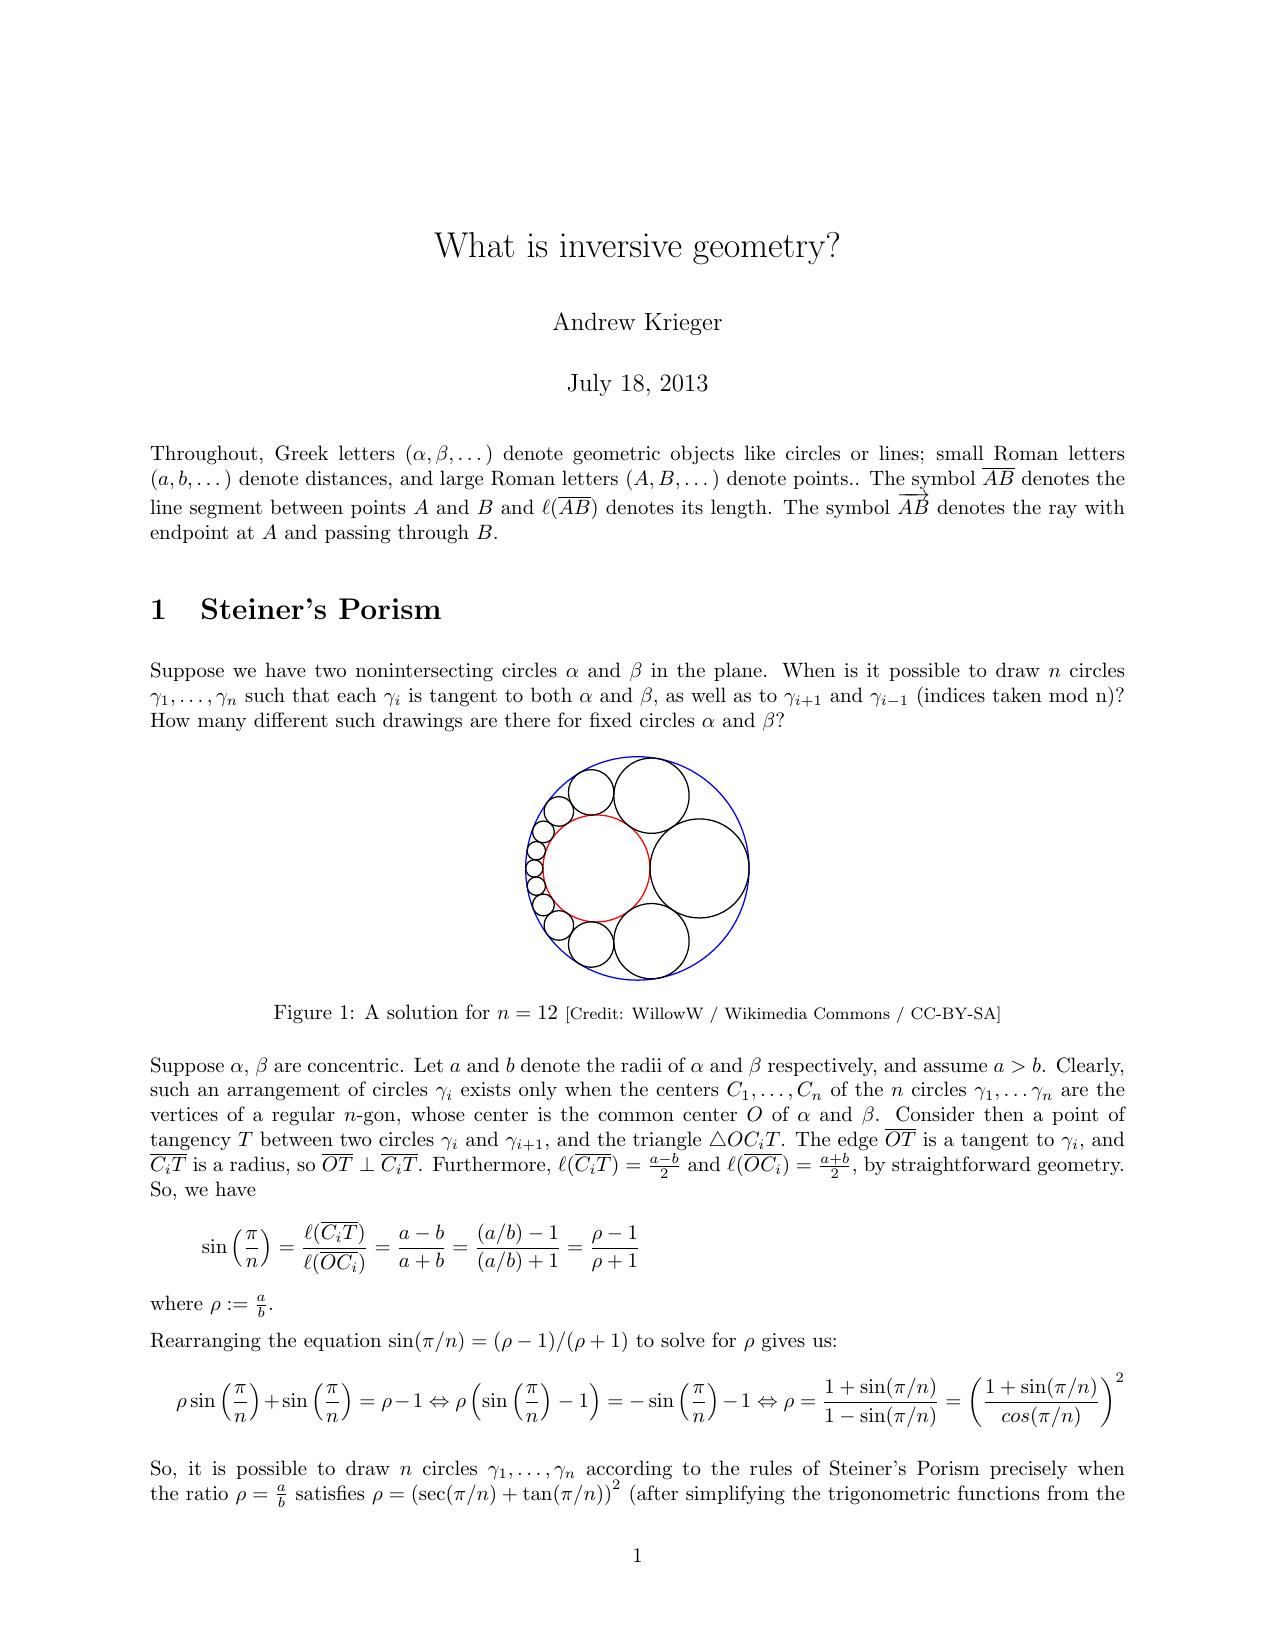 What is Inversive Geometry - Essay